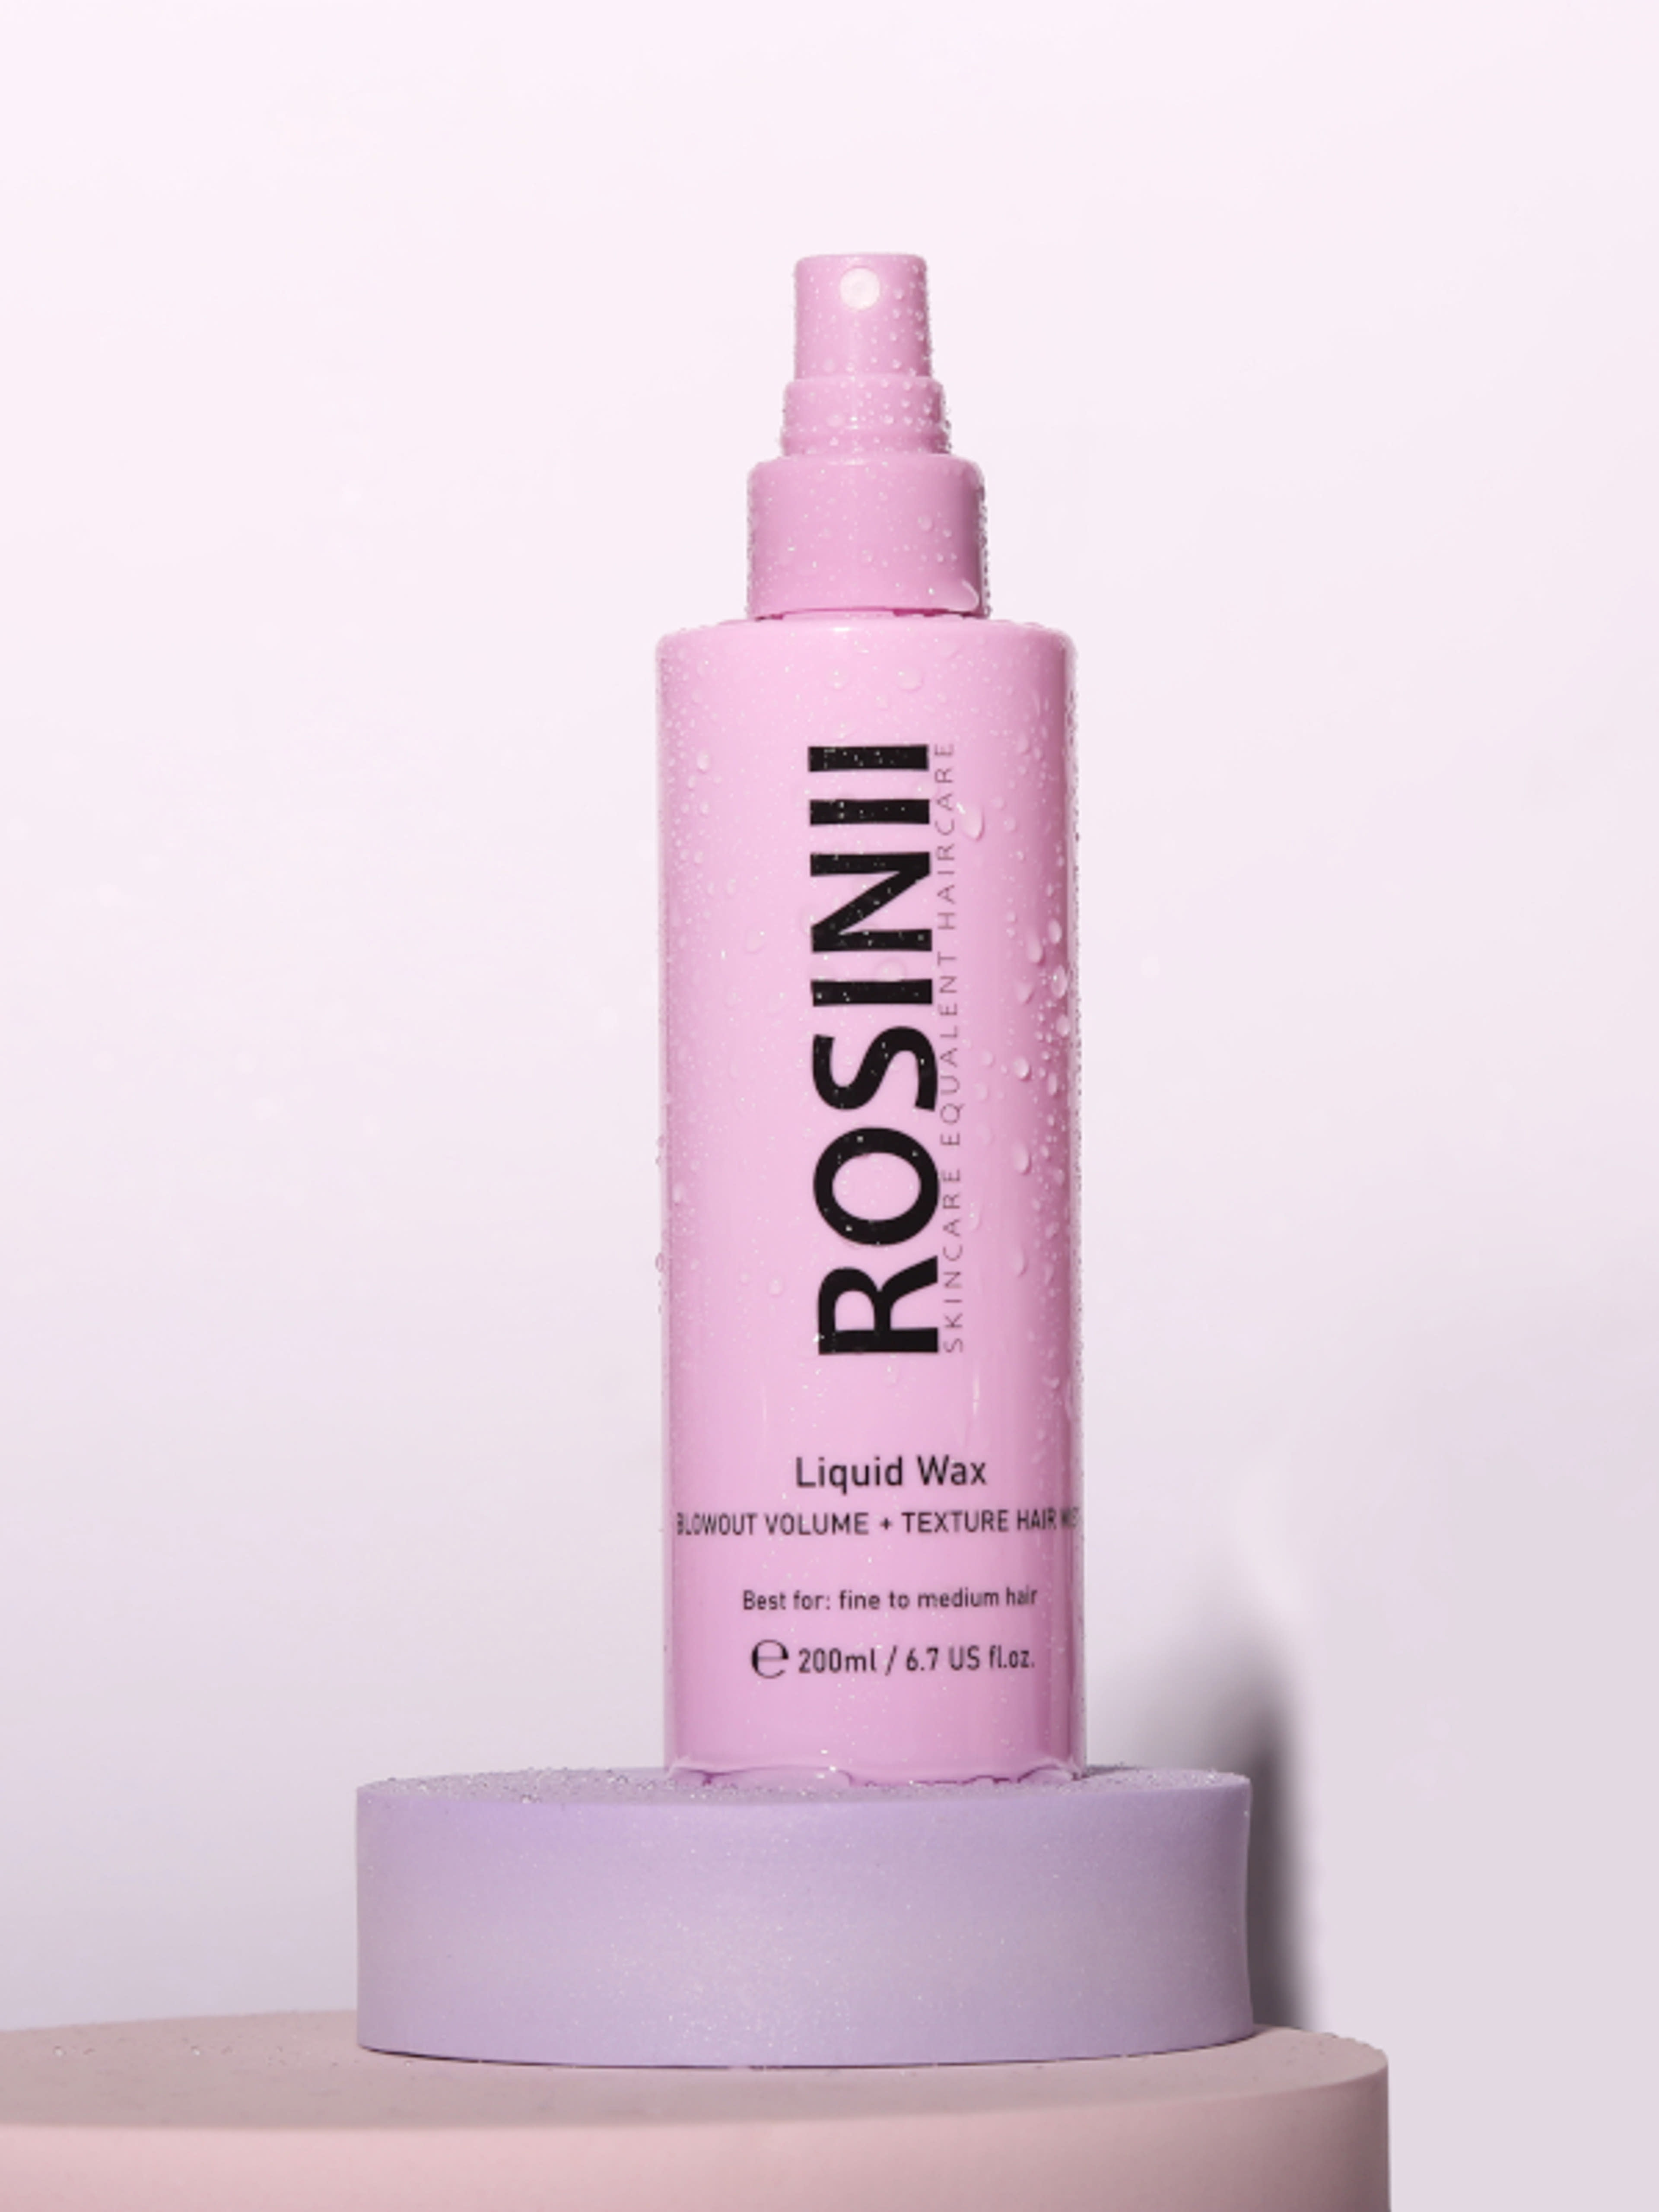 Rosinii Hair Liquid Wax vulumennövelő permet - 200 ml-4